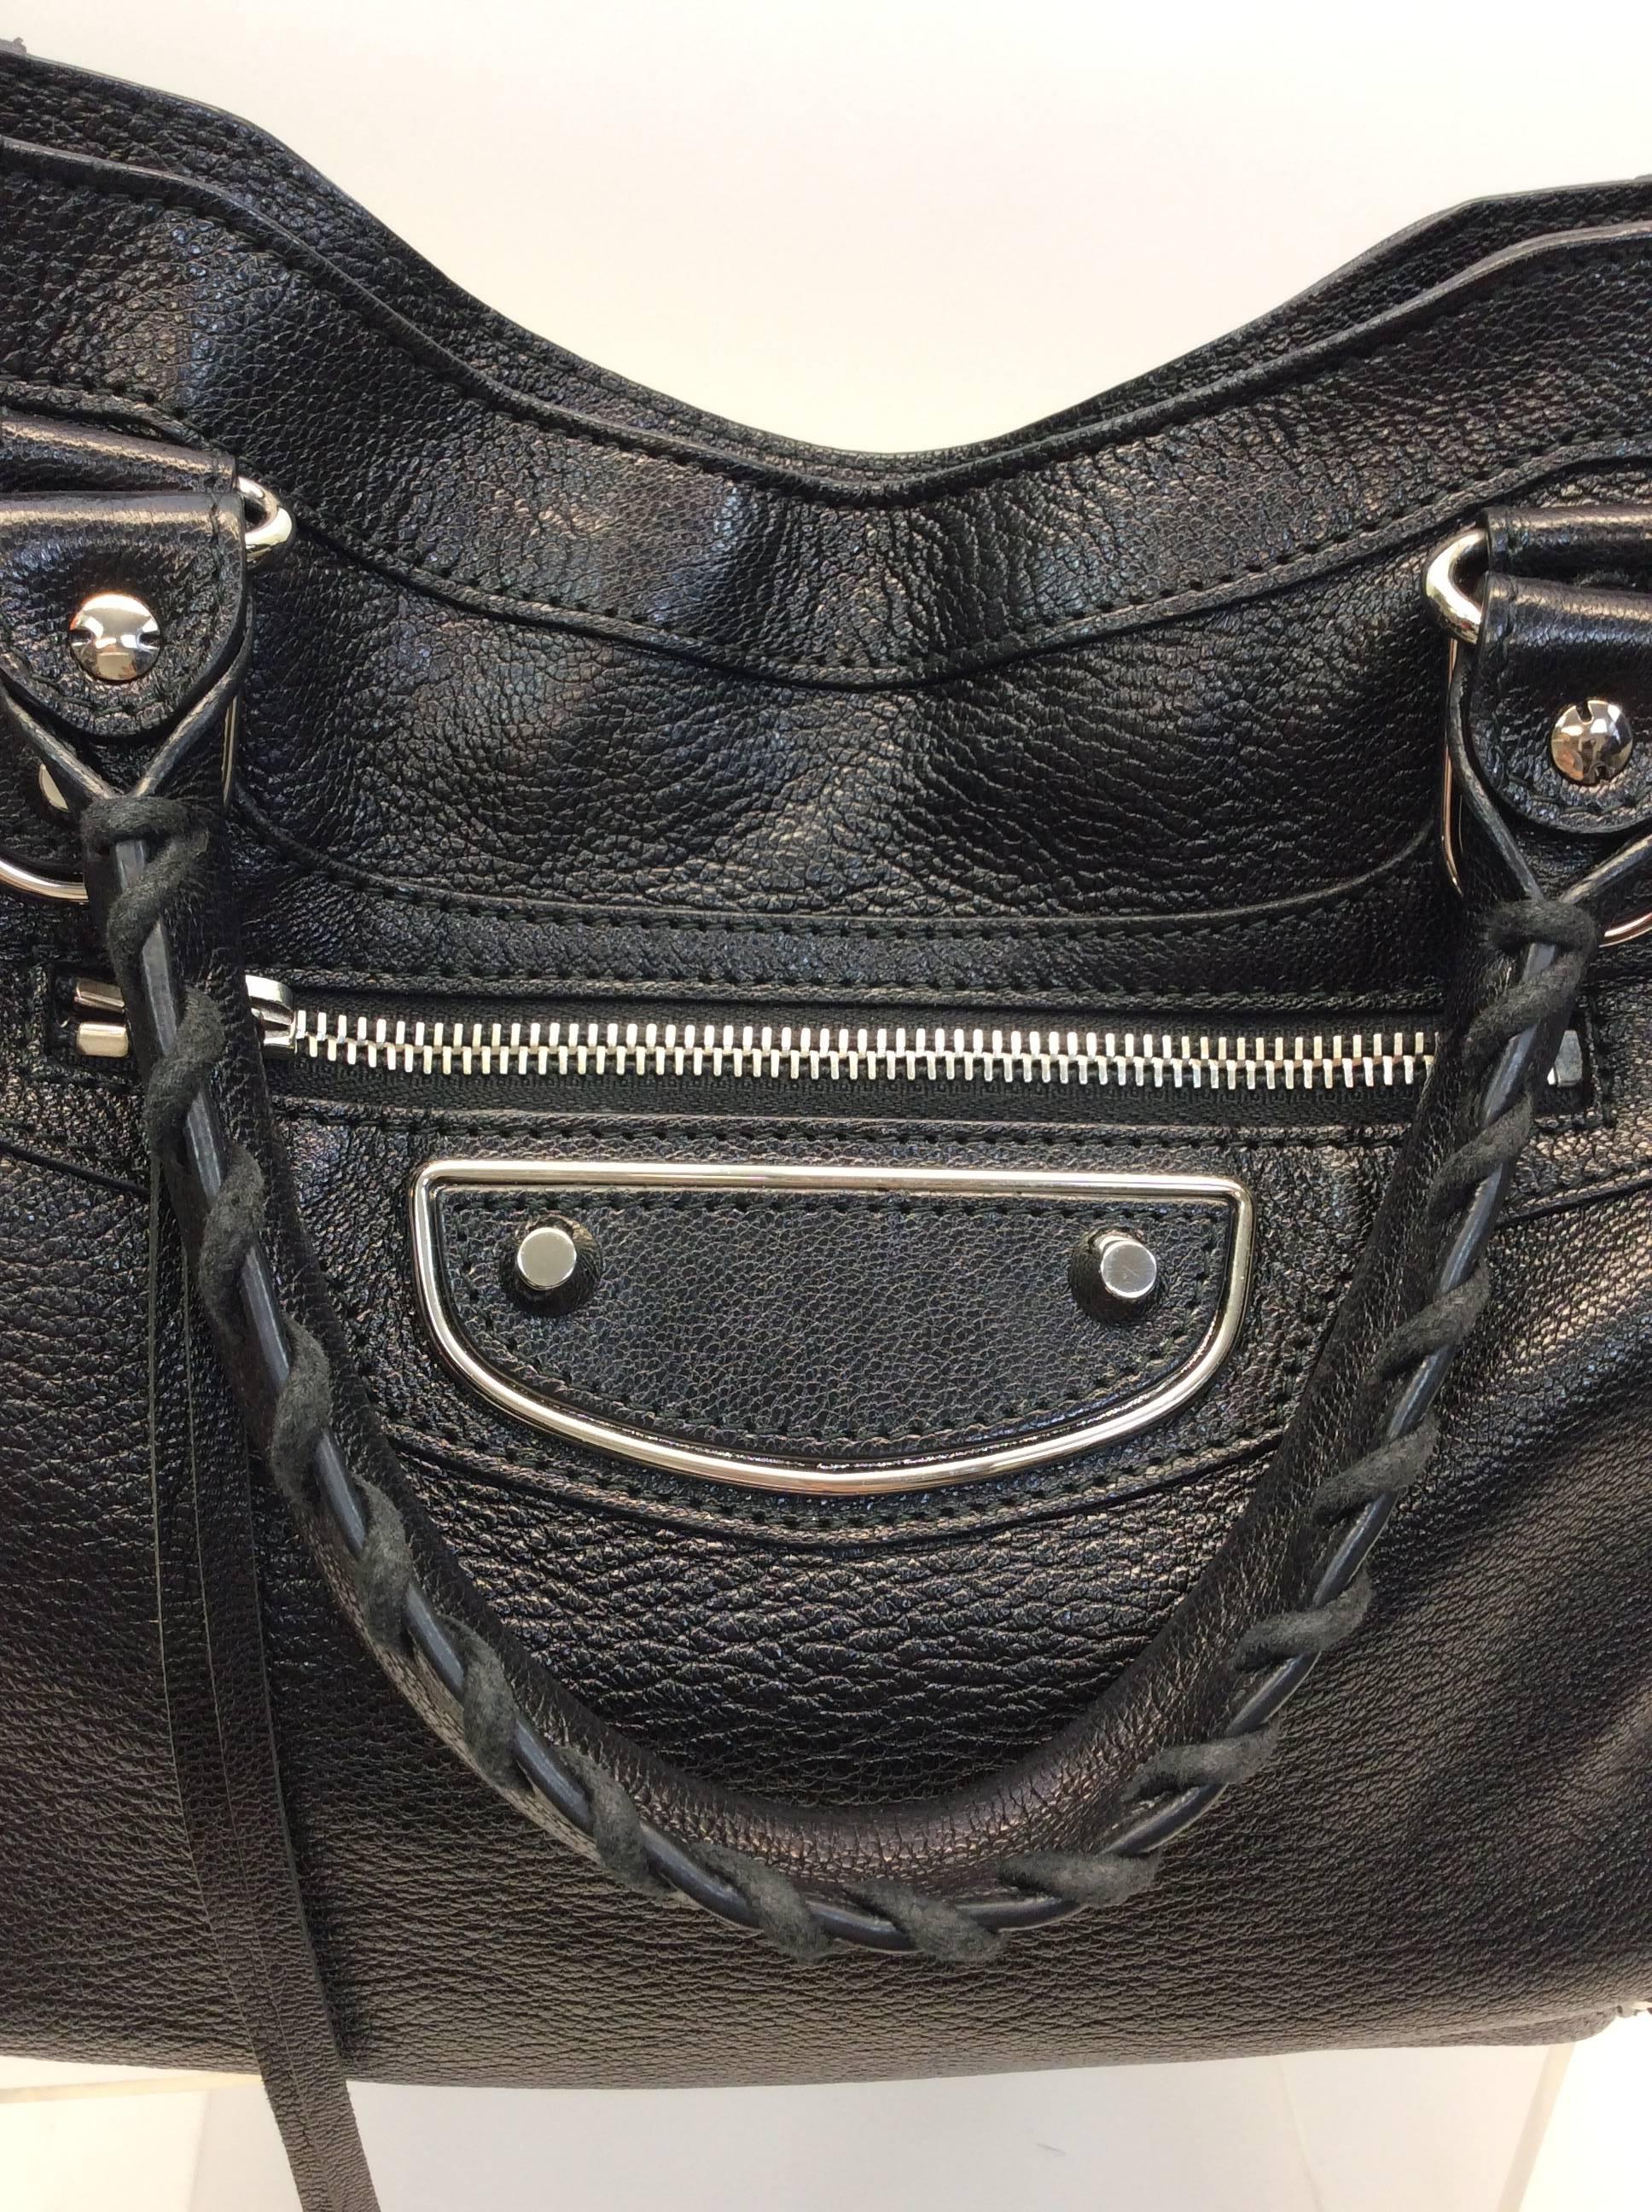 Balenciaga Black Metallic Edge Leather Handbag For Sale 1